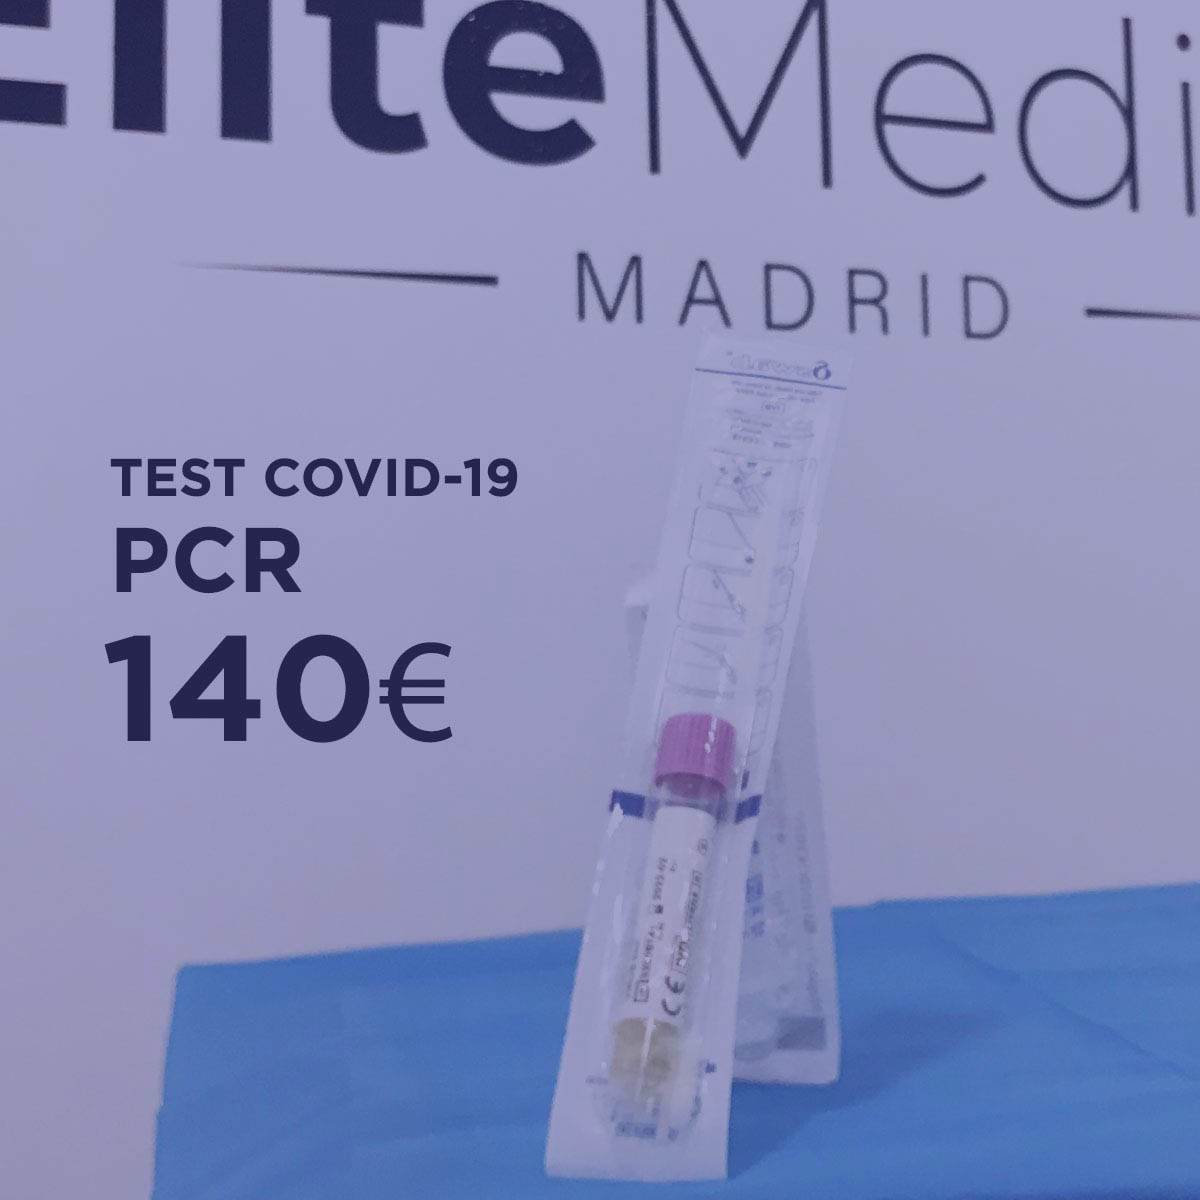 Test PCR Análisis Covid-19 en Élite Medical Madrid